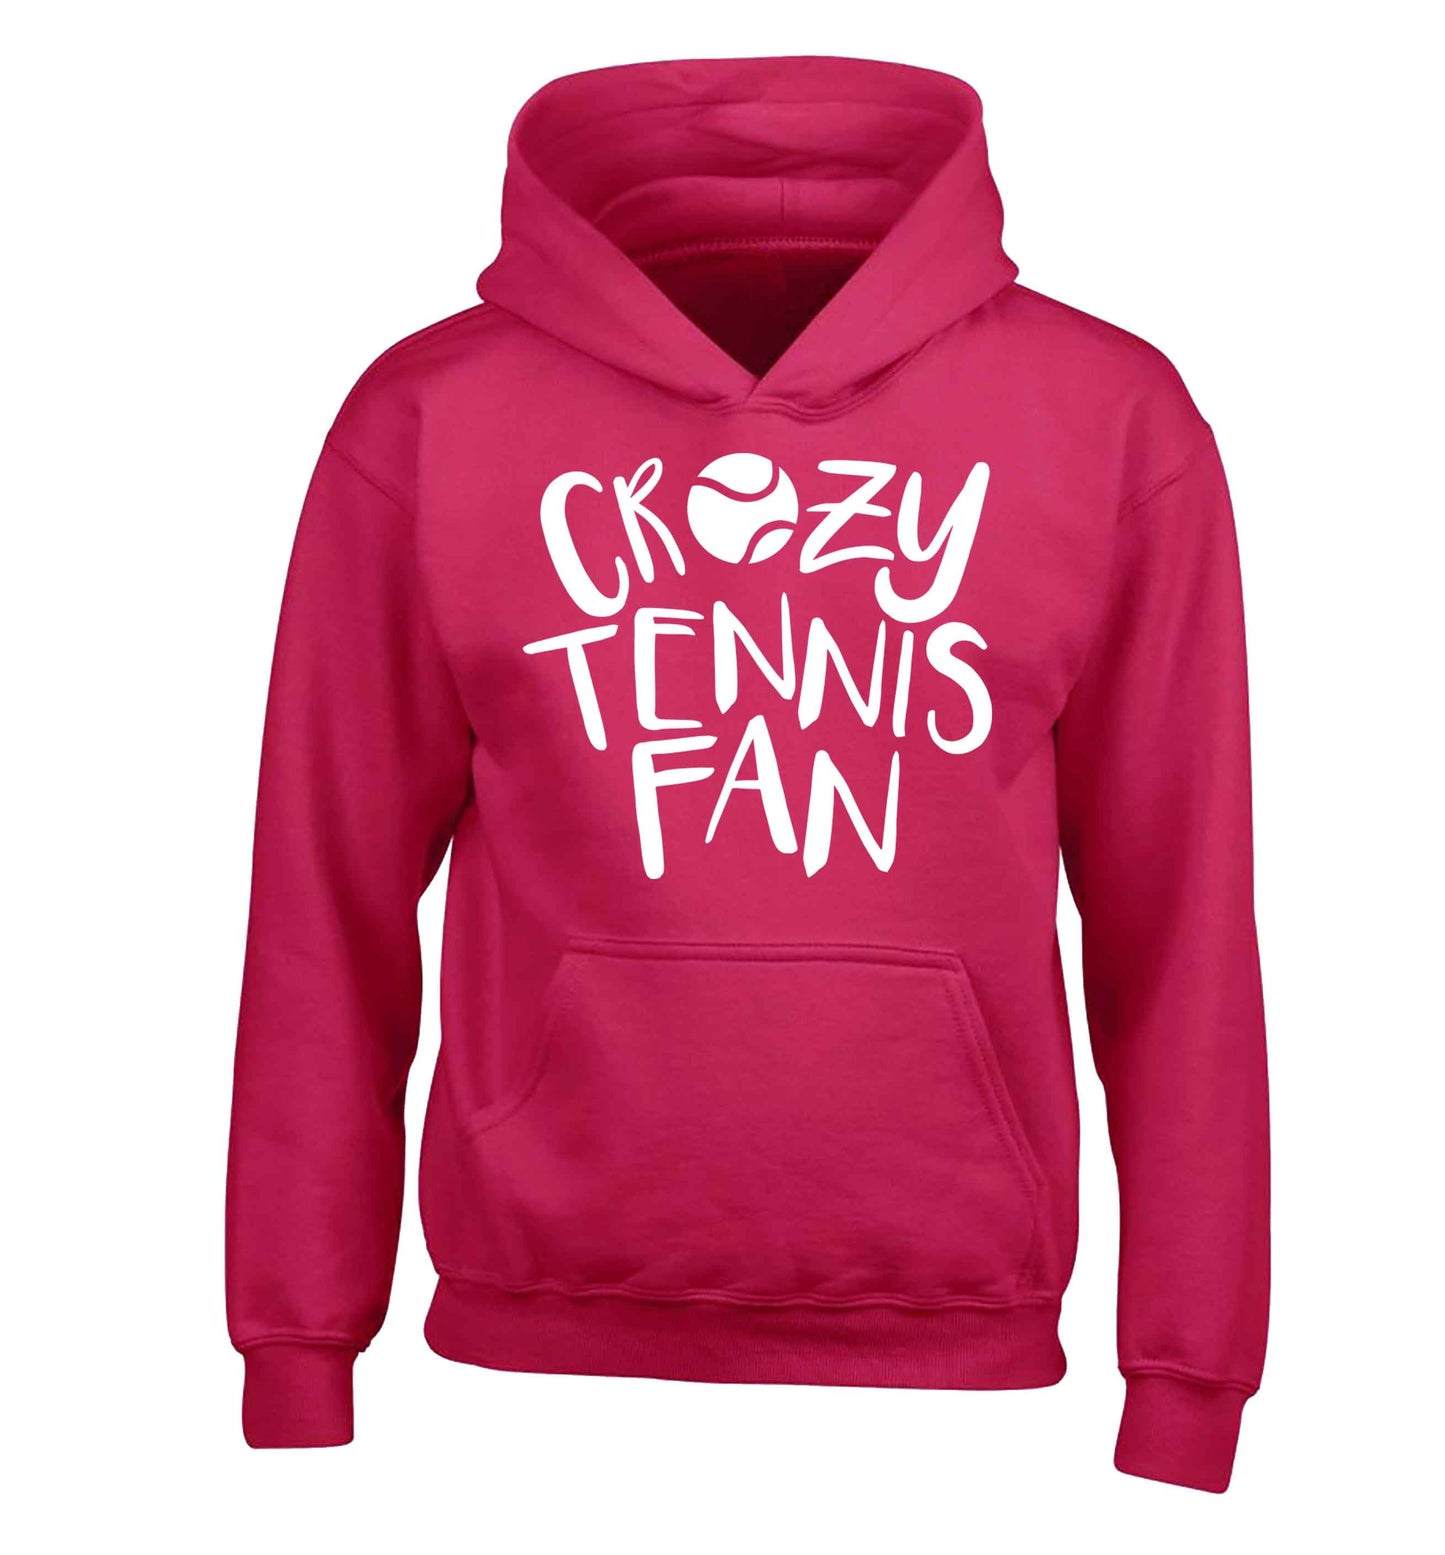 Crazy tennis fan children's pink hoodie 12-13 Years